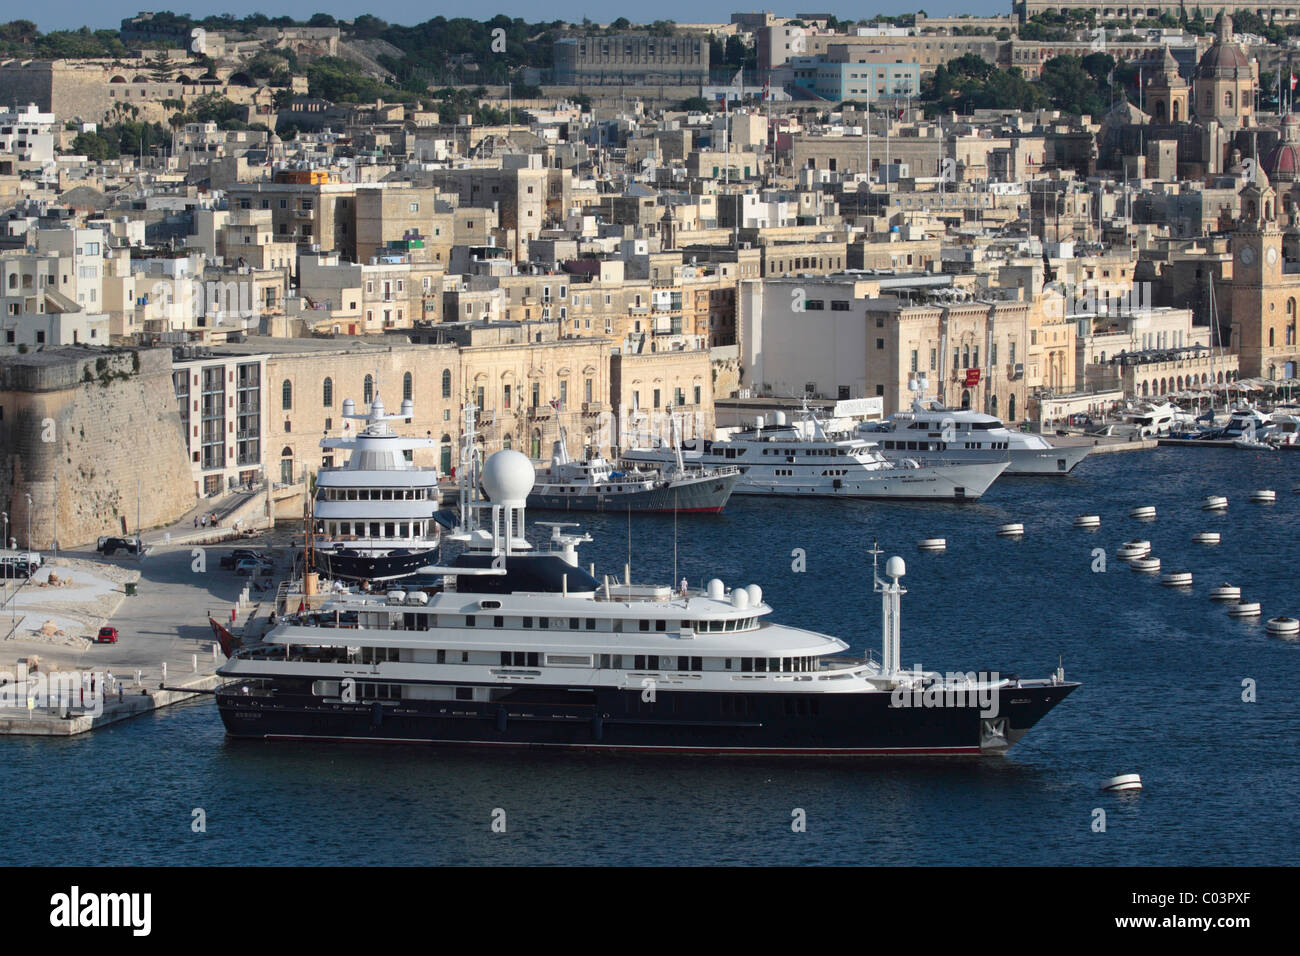 The superyacht Reborn in Malta's Grand Harbour Stock Photo